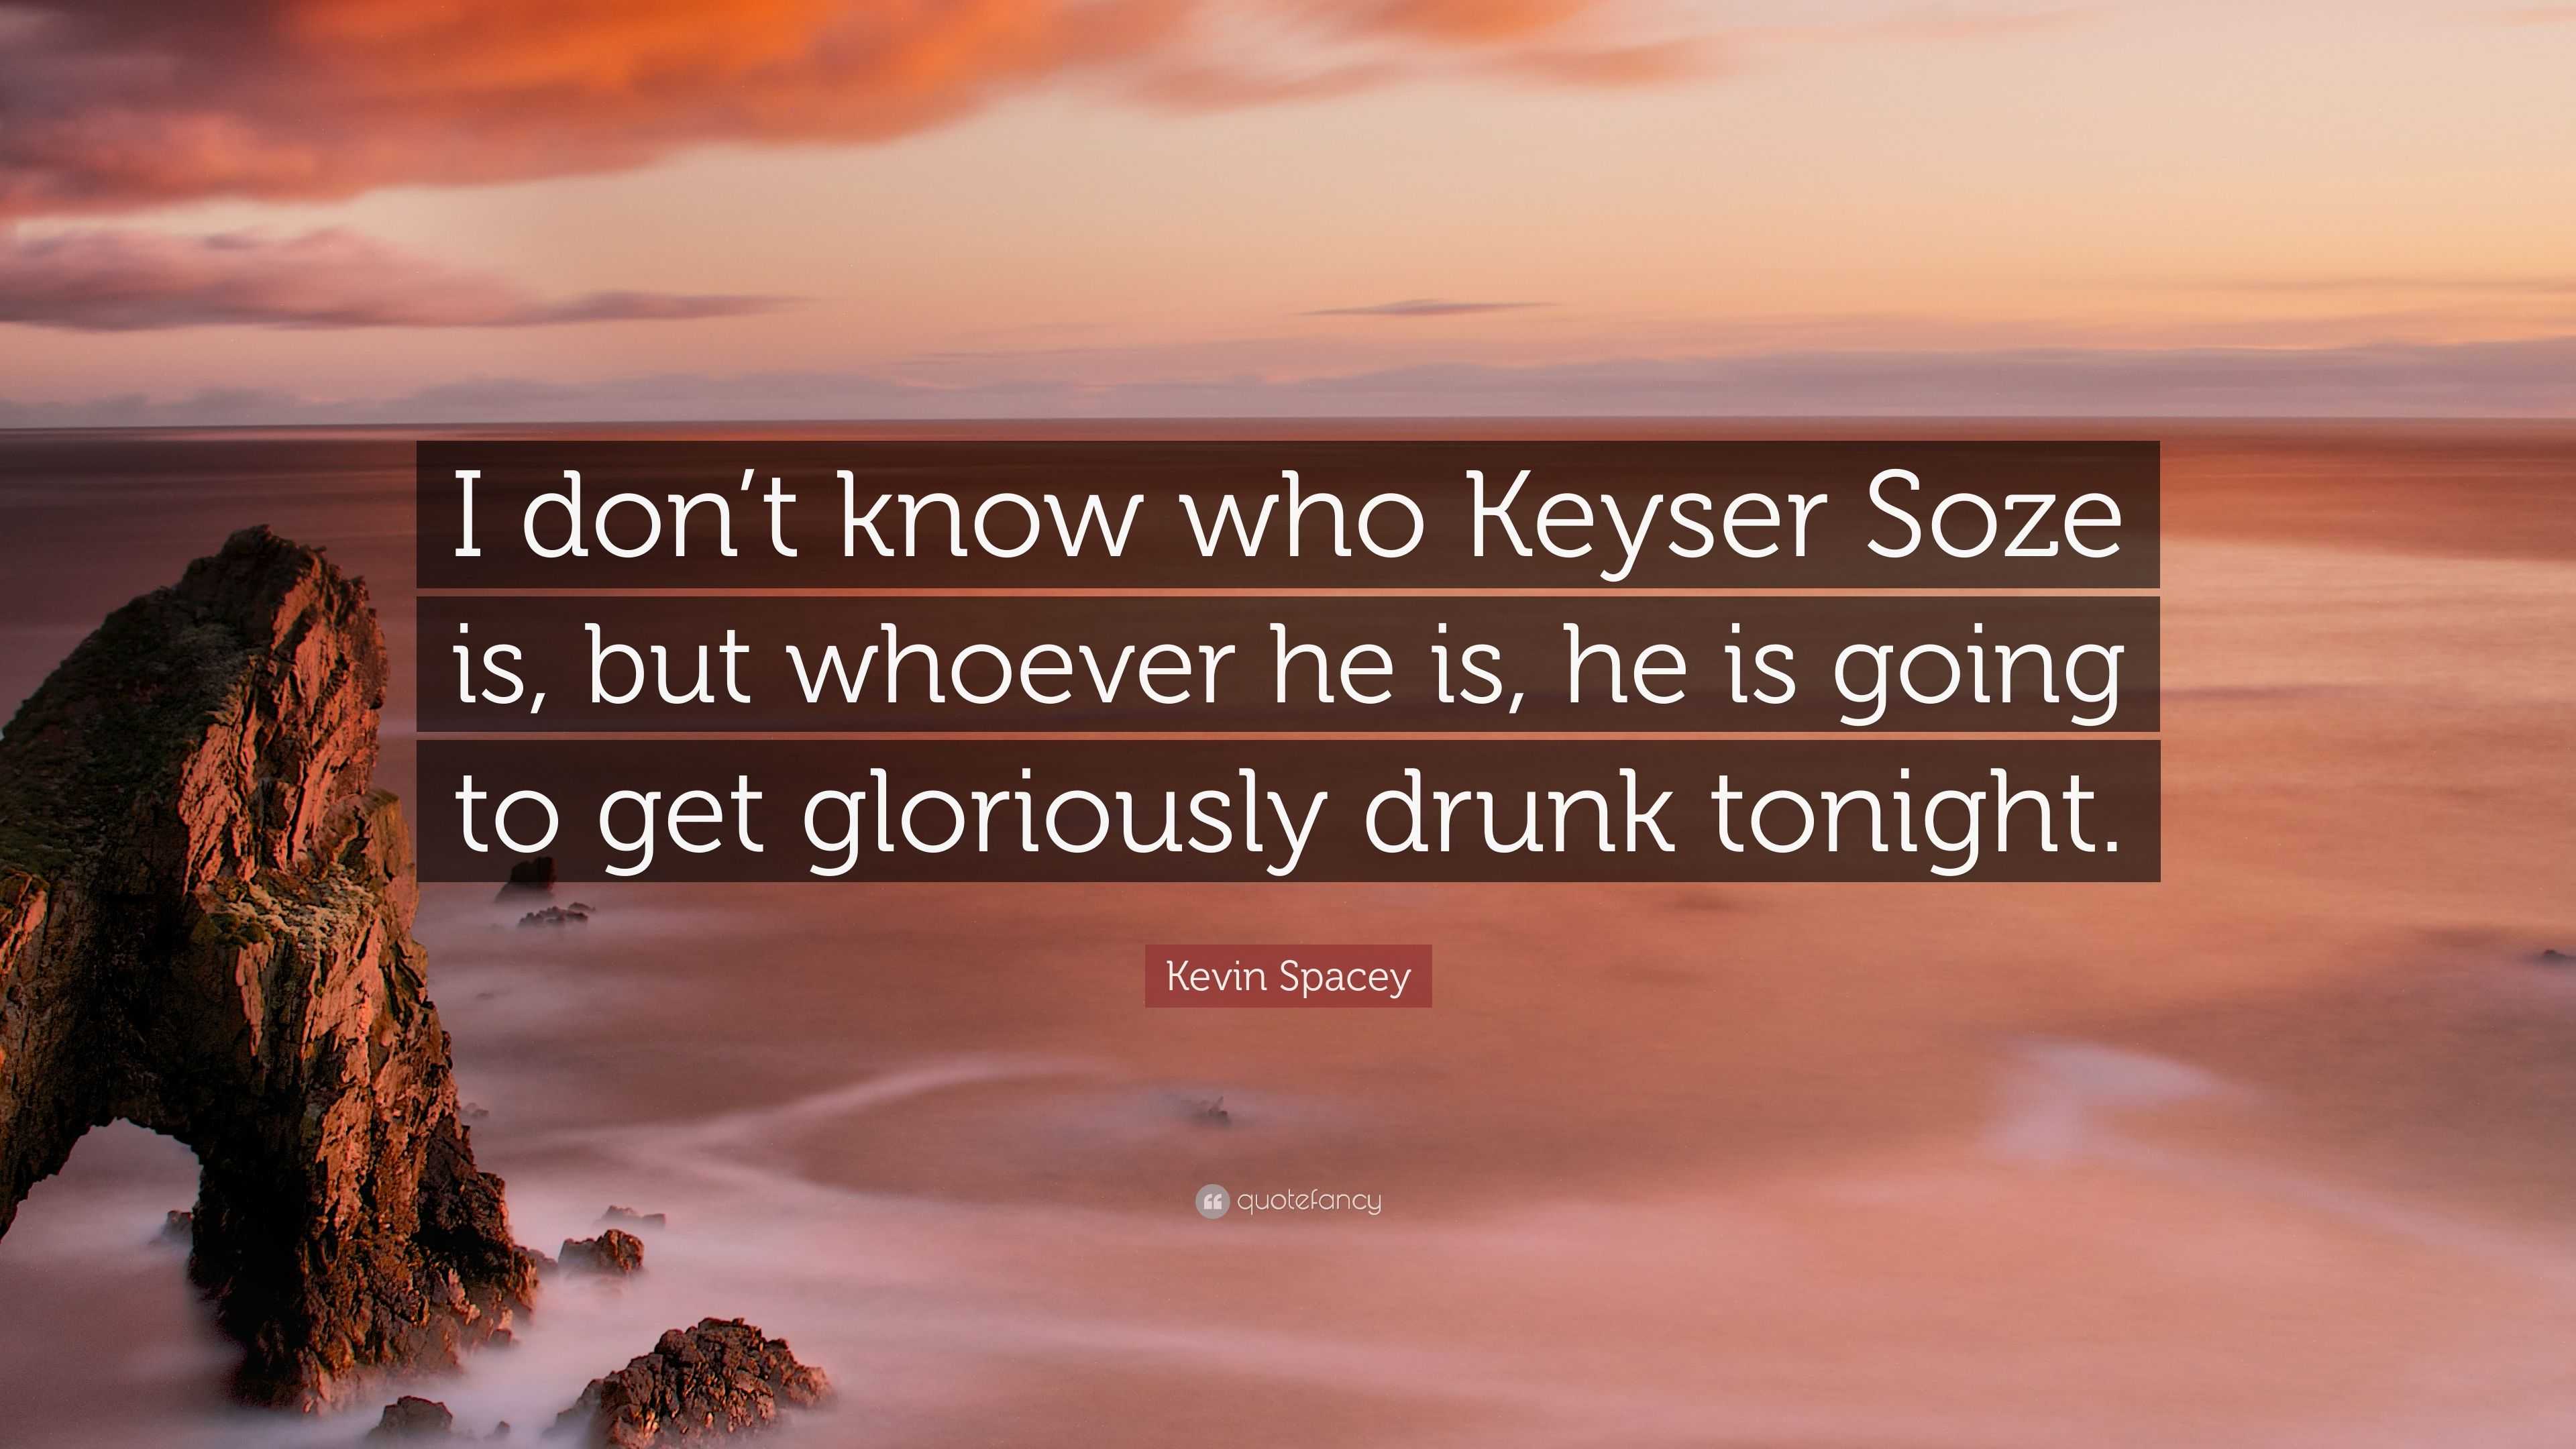 Kevin Spacey is Keyser Söze